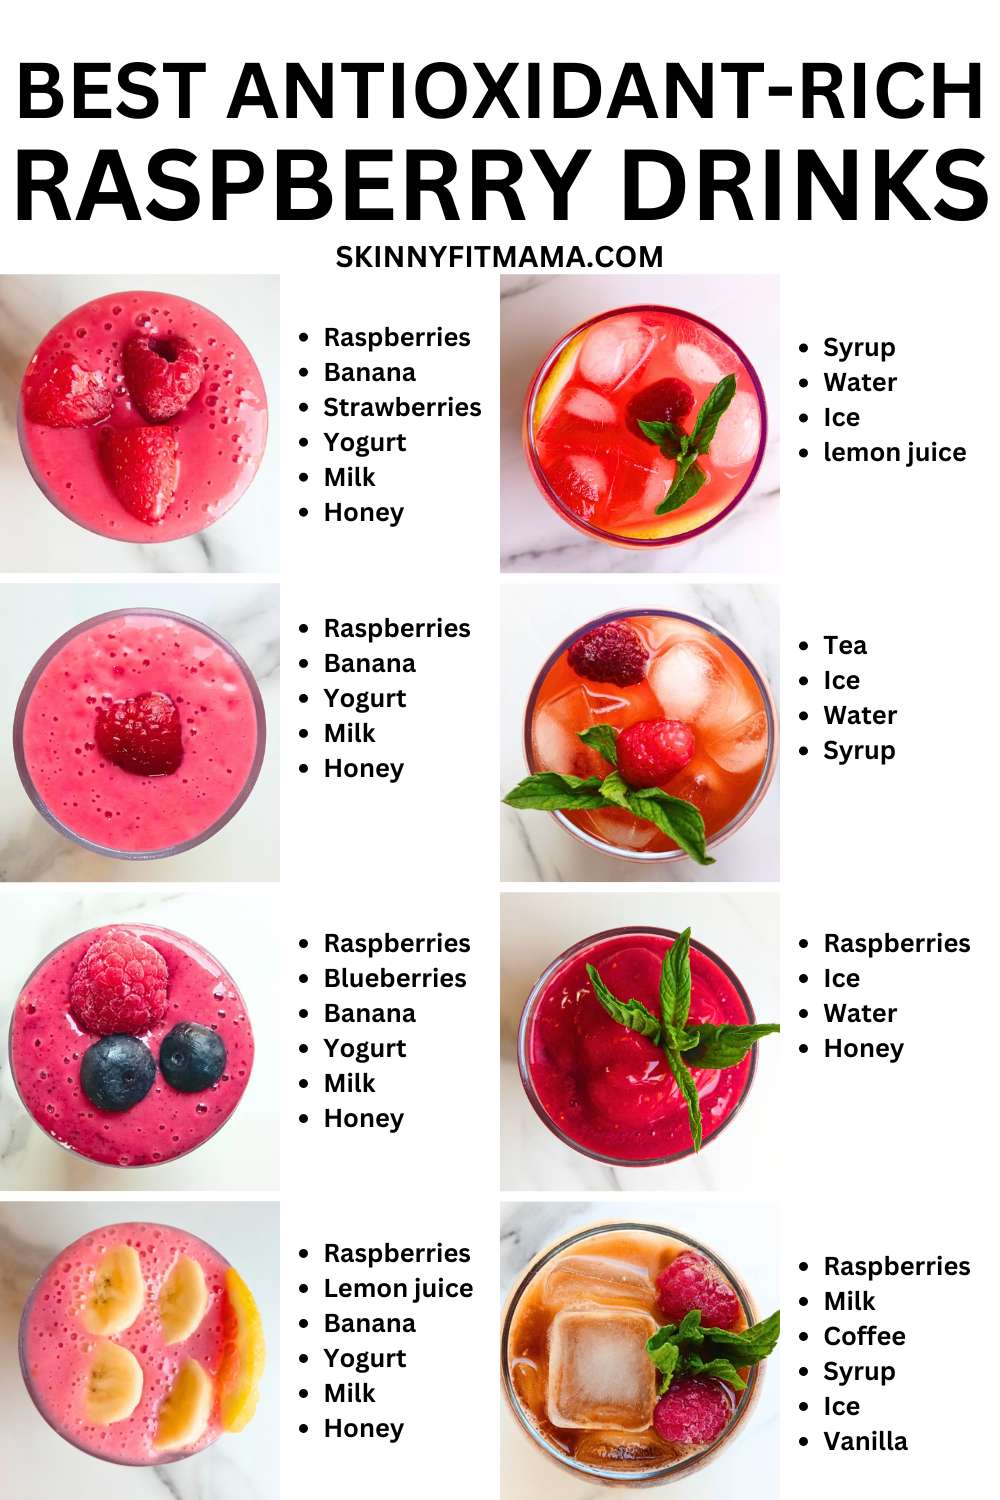 The Best Antioxidant-rich raspberry drinks for summer